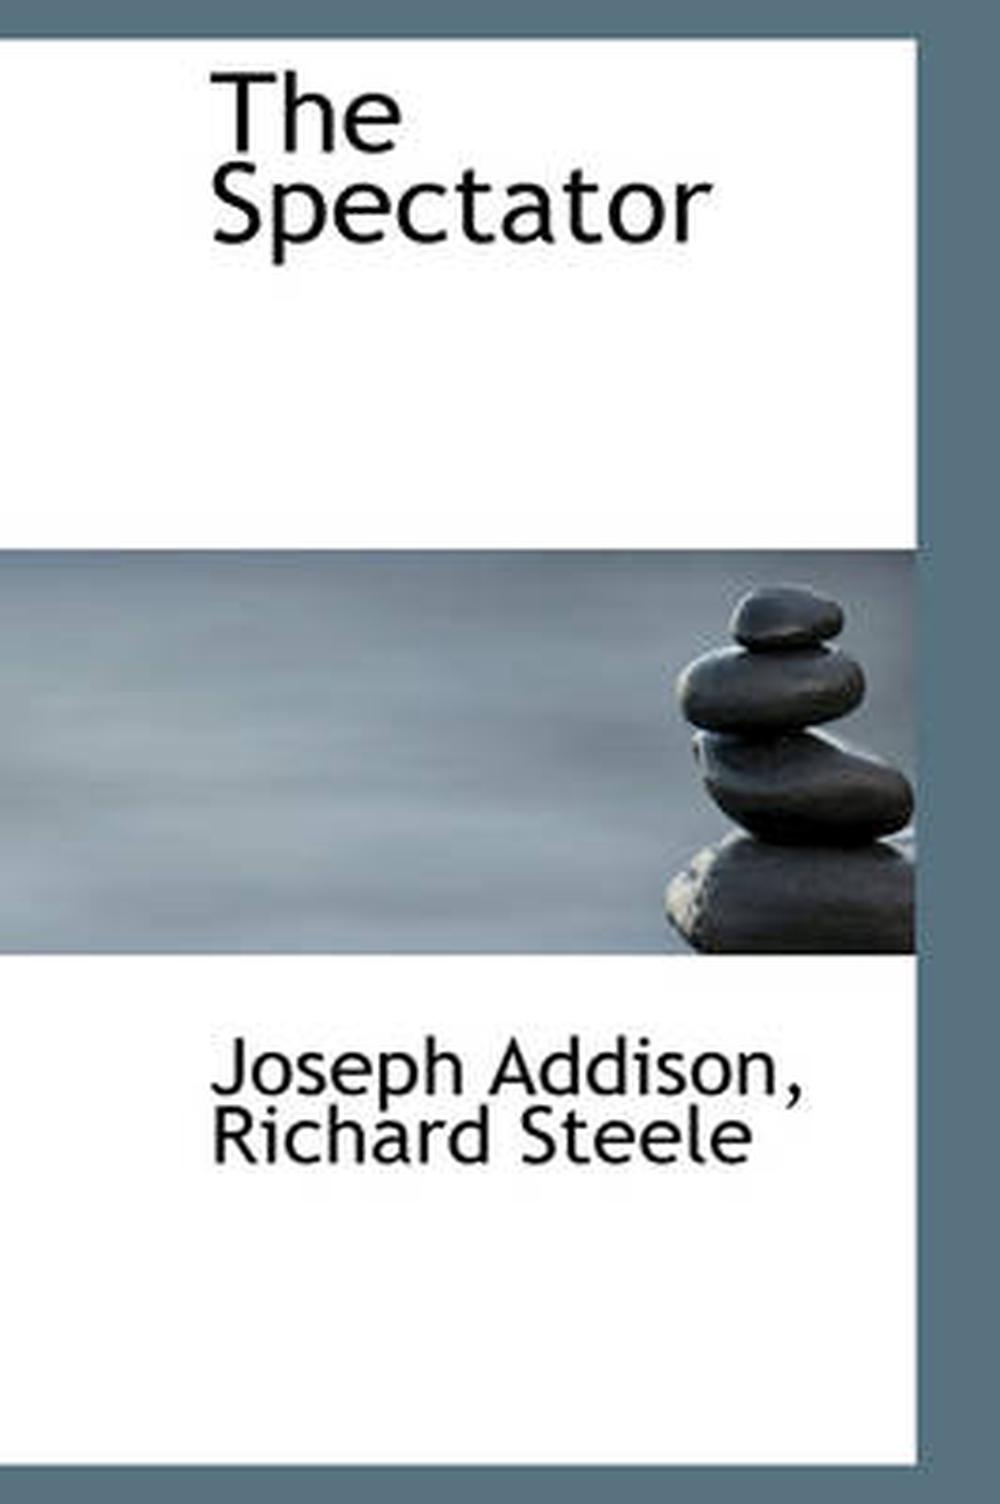 The Spectator. [By Joseph Addison, Richard Steele and Others] by Joseph Addison